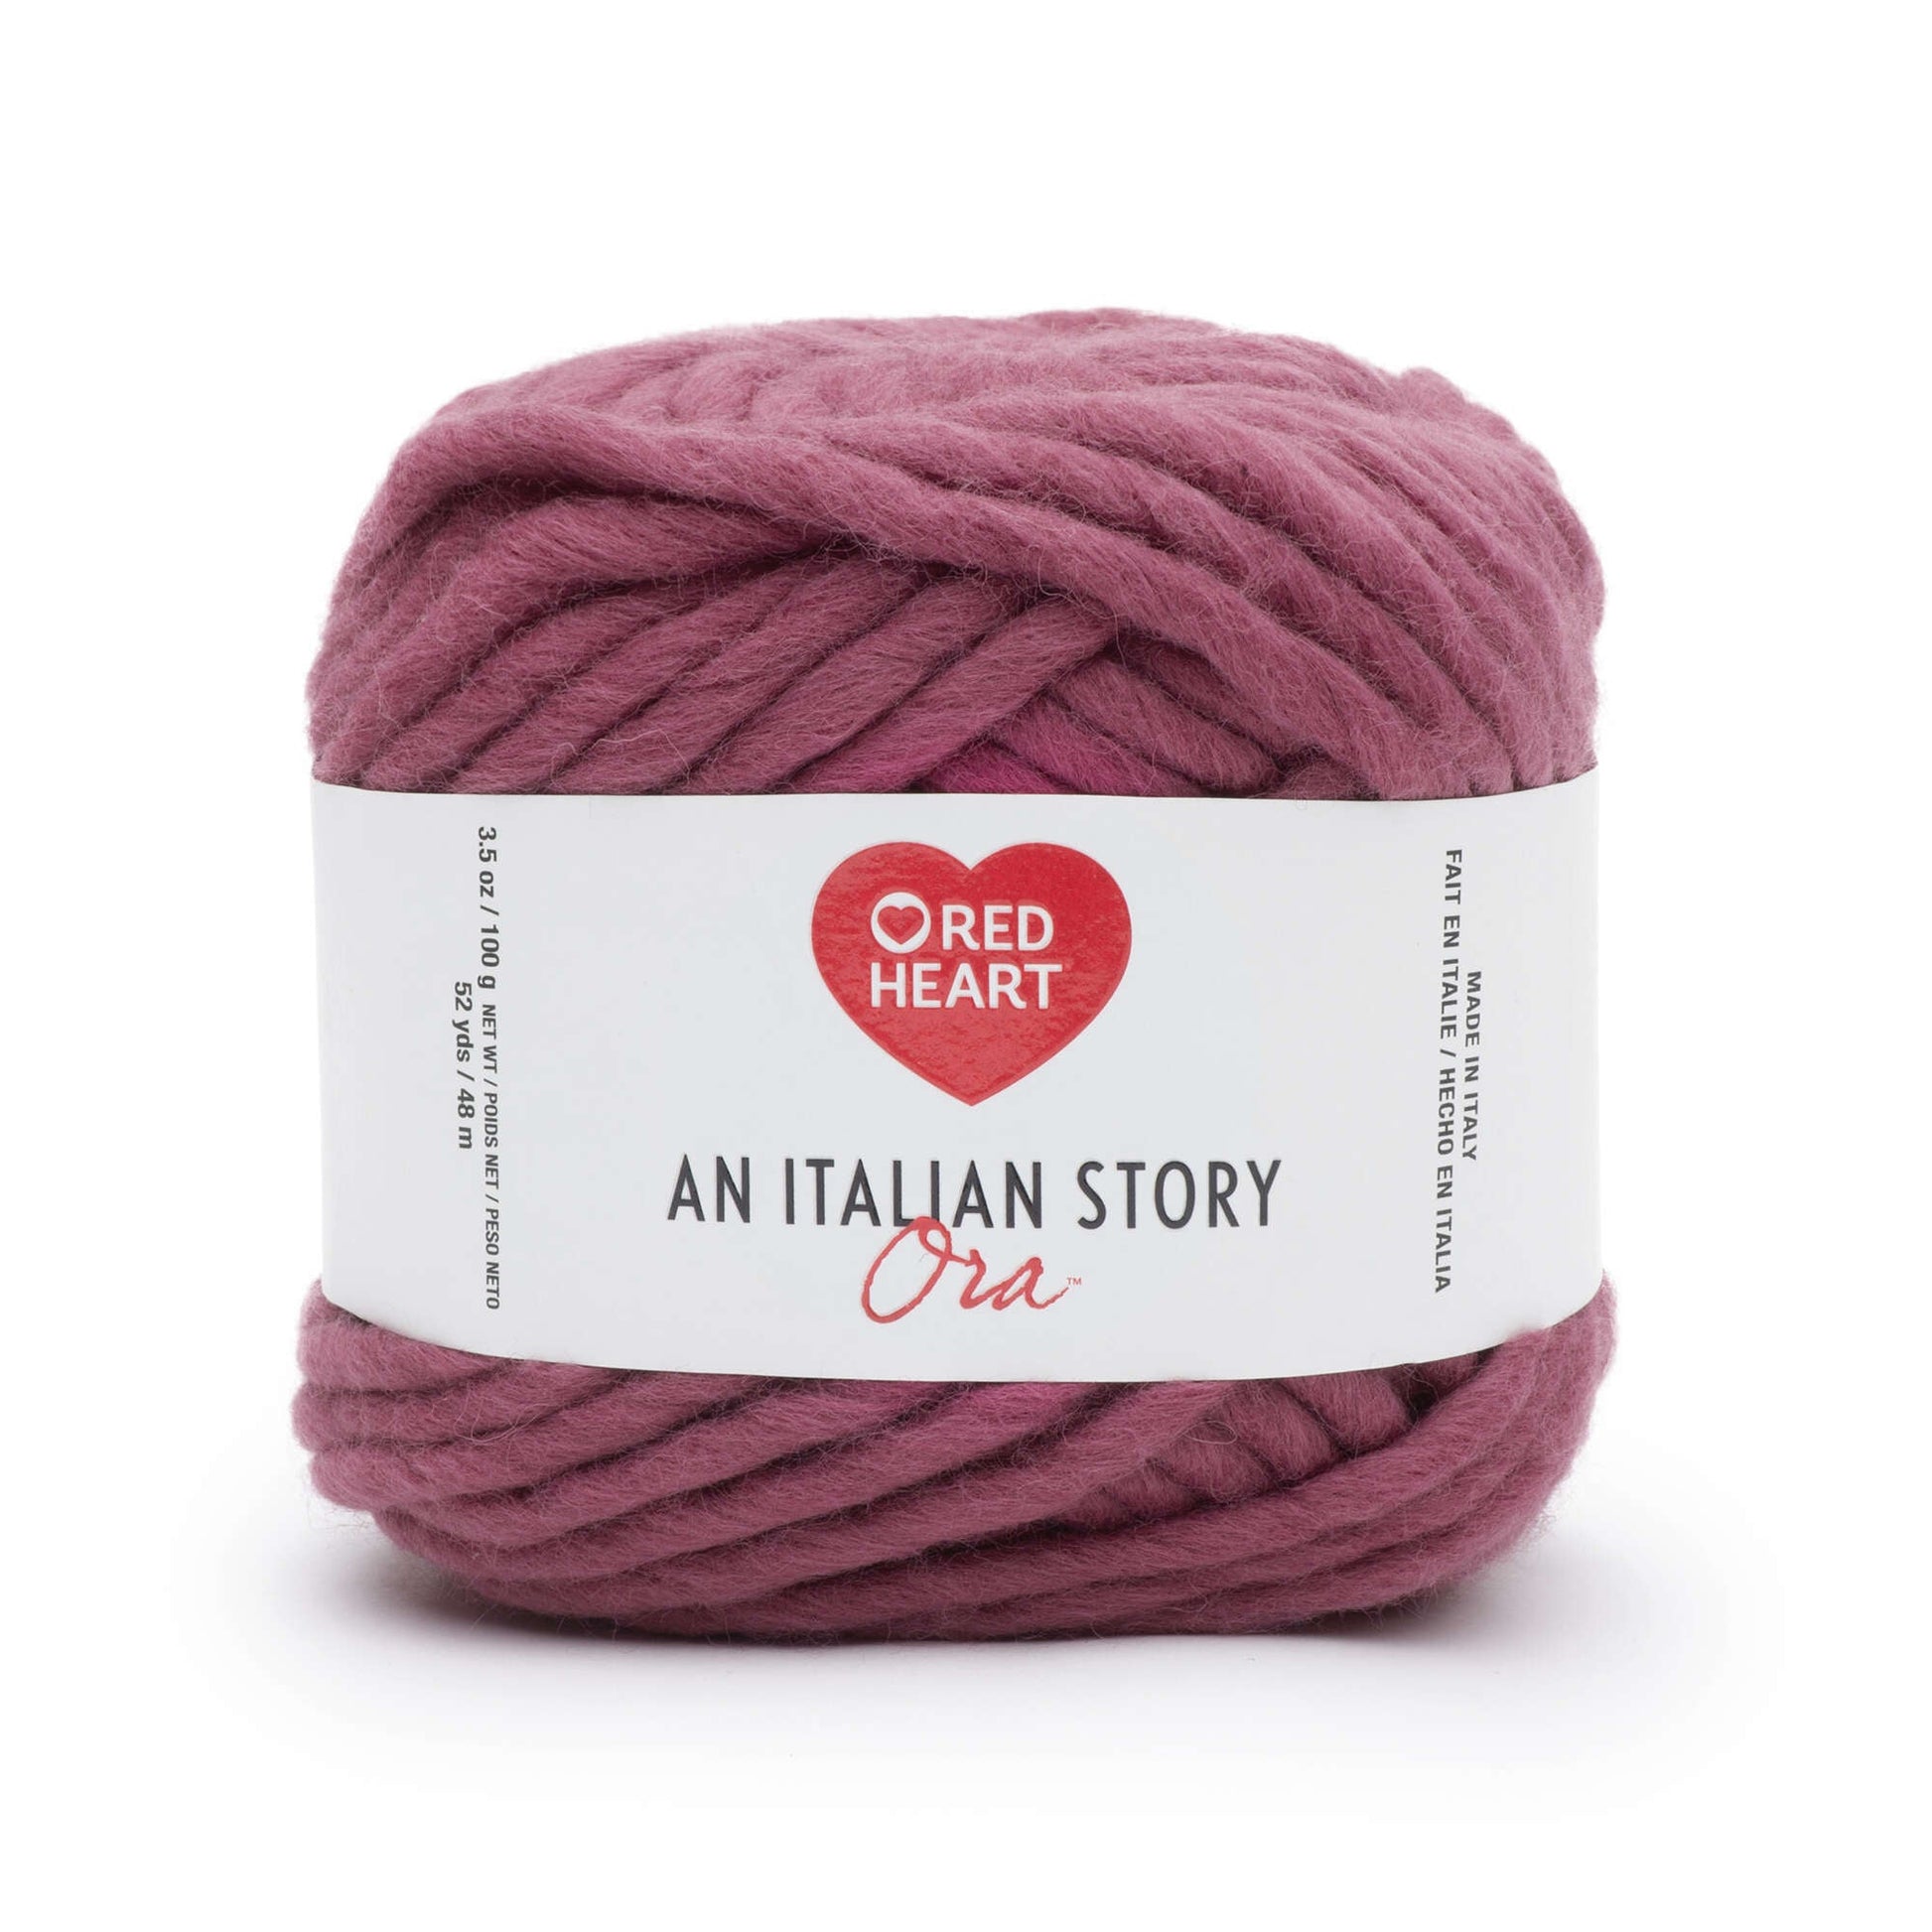 Red Heart An Italian Story Ora Yarn - Discontinued shades